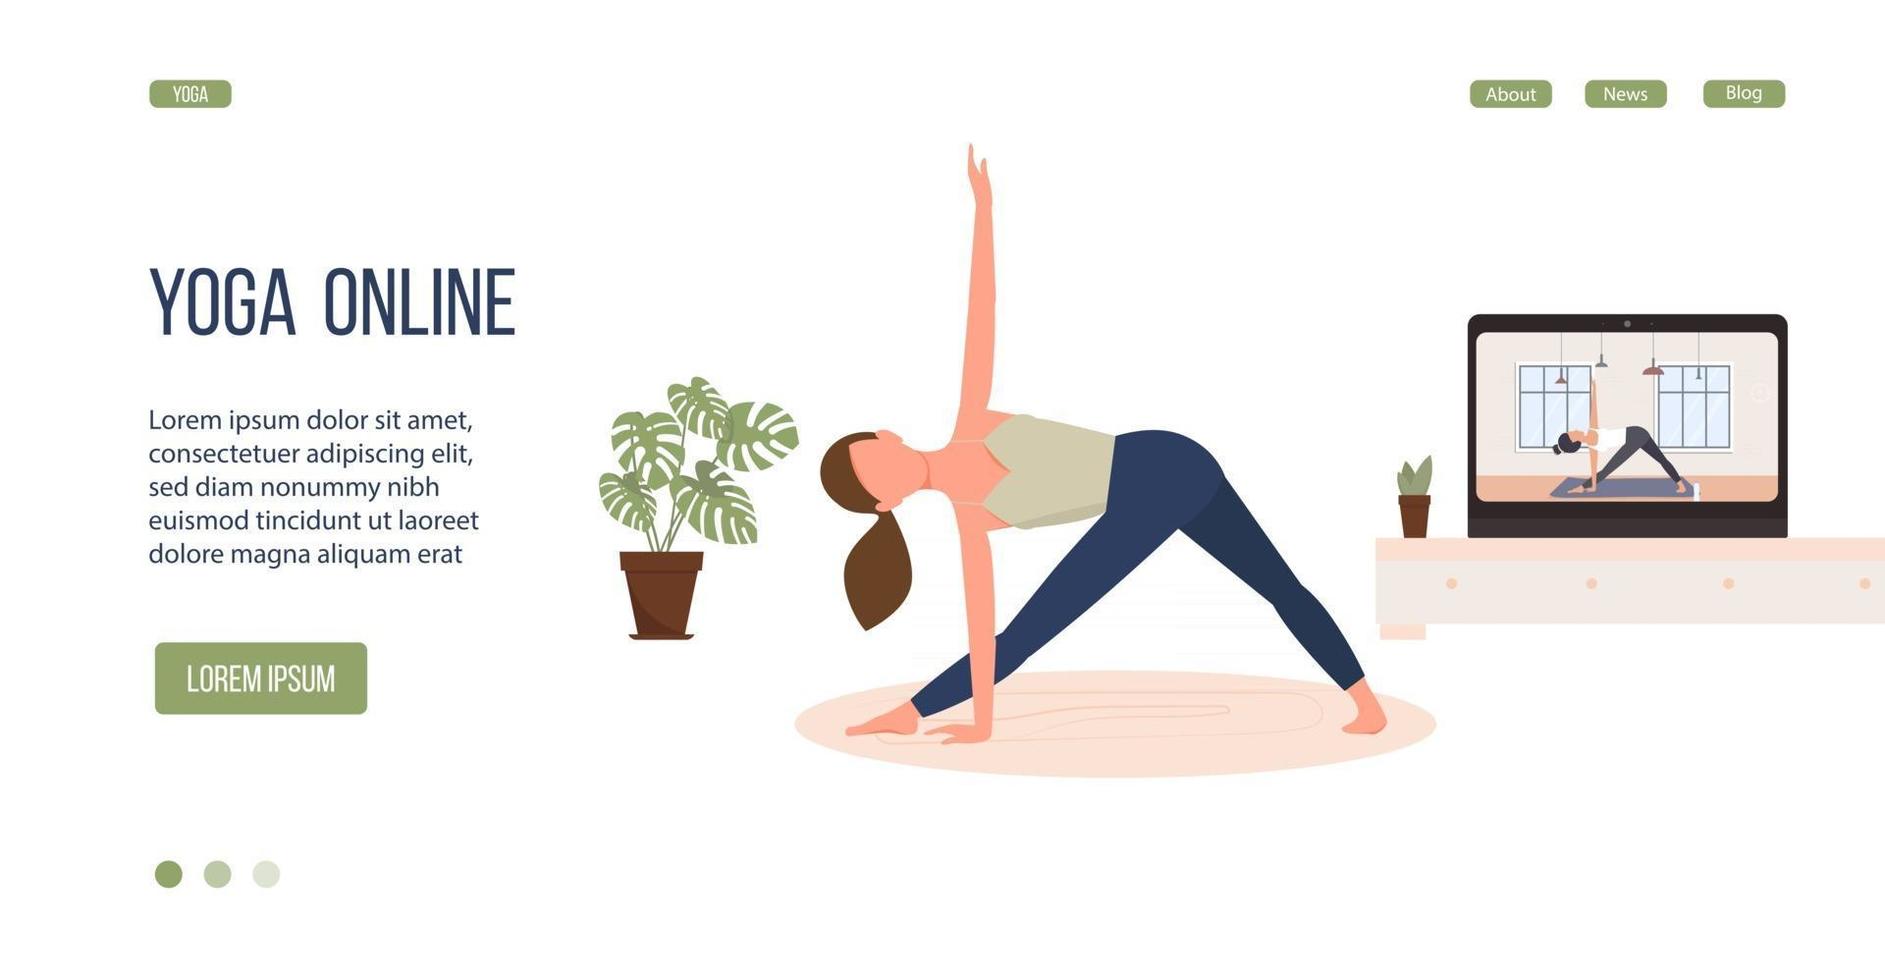 Online yoga practice. Banner design. illustration, eps 10 vector